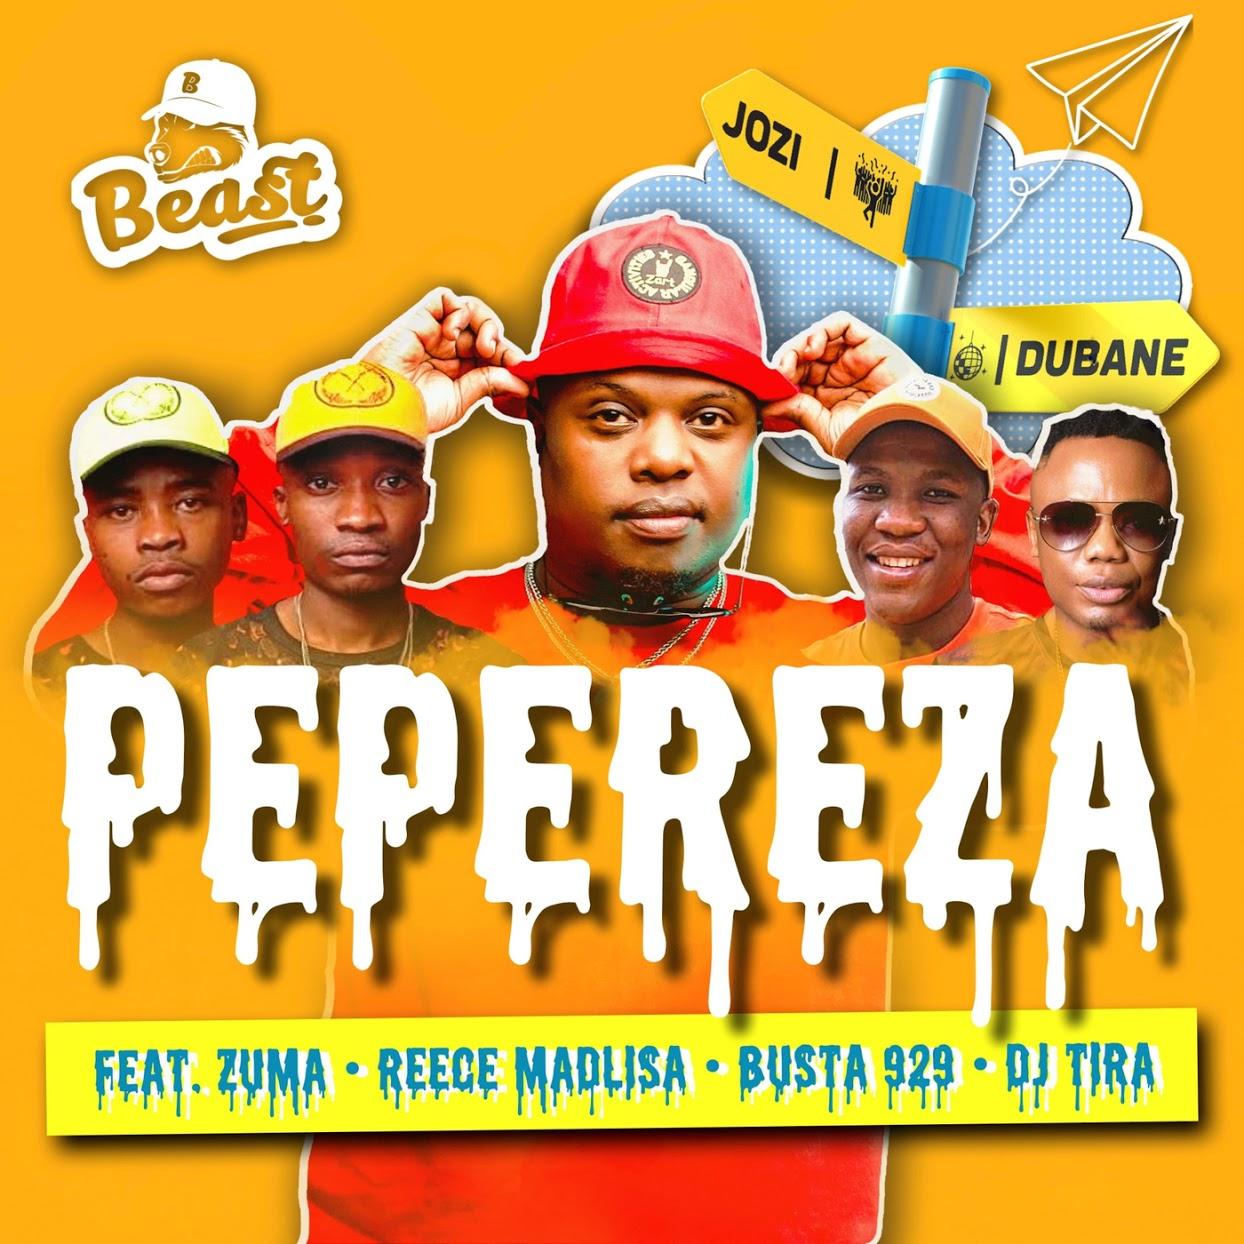 Beast - Pepereza (feat. Zuma, Reece Madlisa, Busta 929 & DJ Tira)